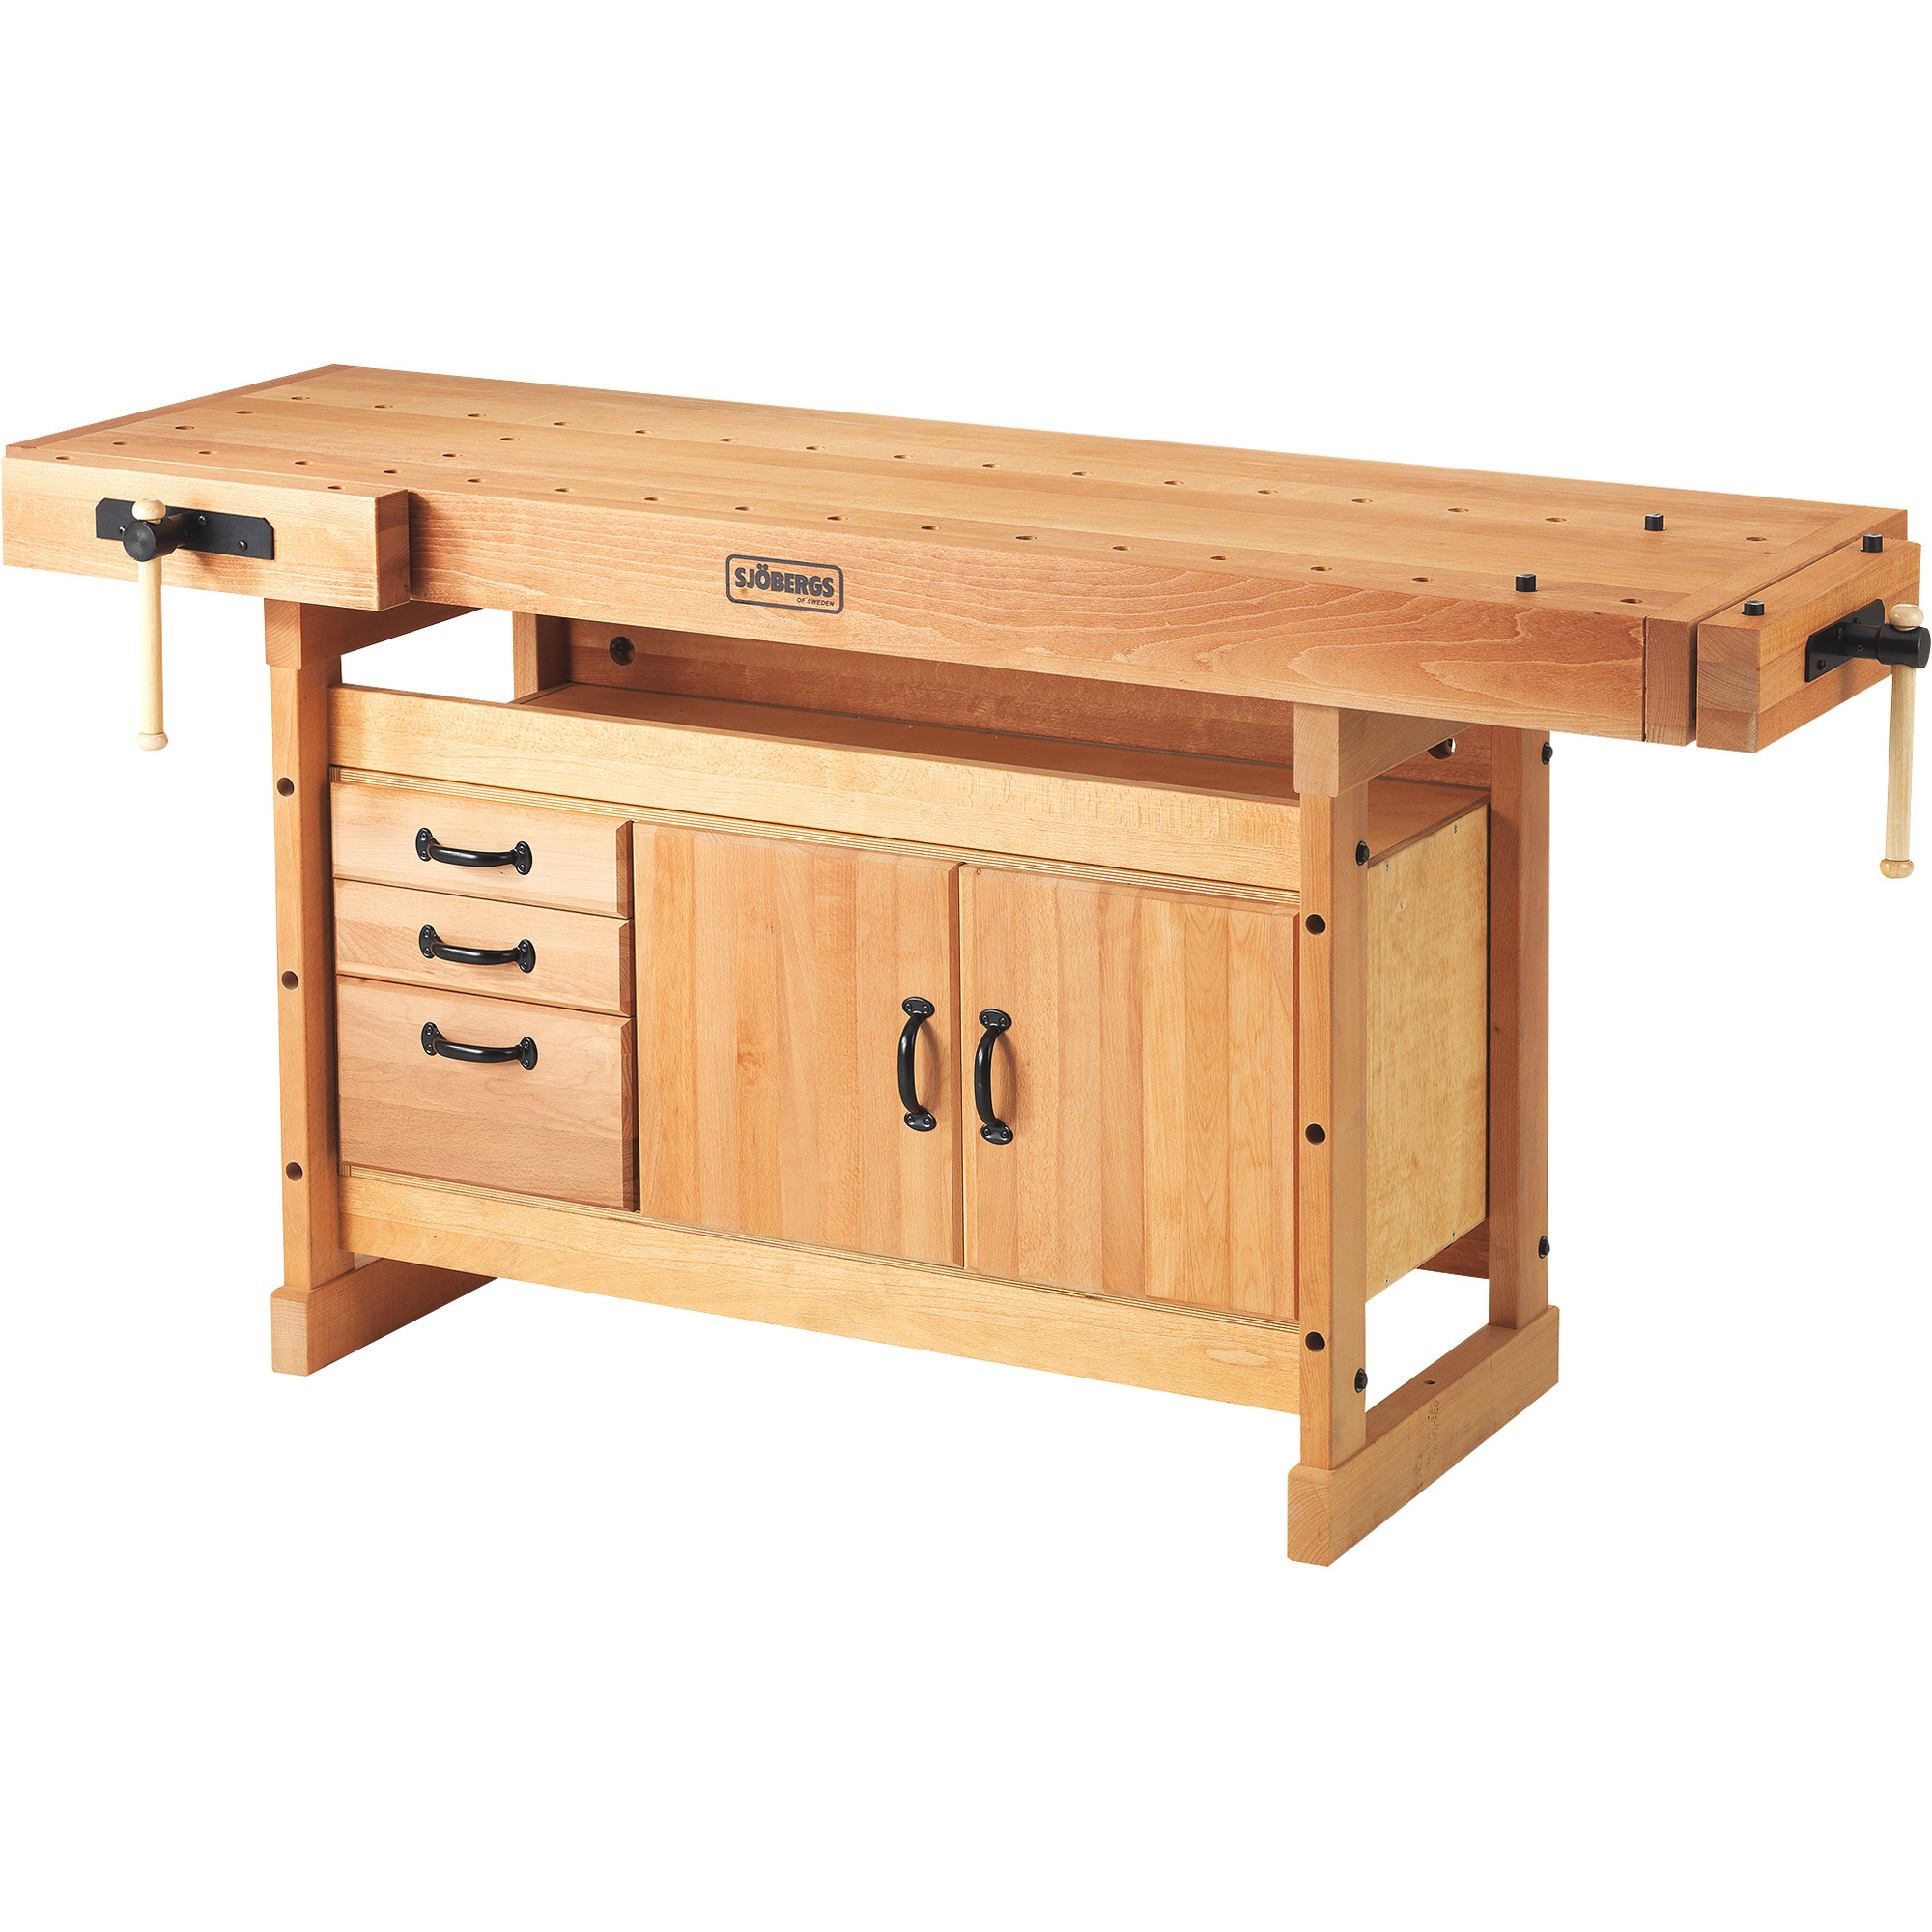 and x 27 Workbench Wood SJO-66736K x 73 Northern 5/32in.W Sjobergs 7/16in.H, Tool 1825 Model# 35 | Plus 15/16in.D Cabinet— Scandi